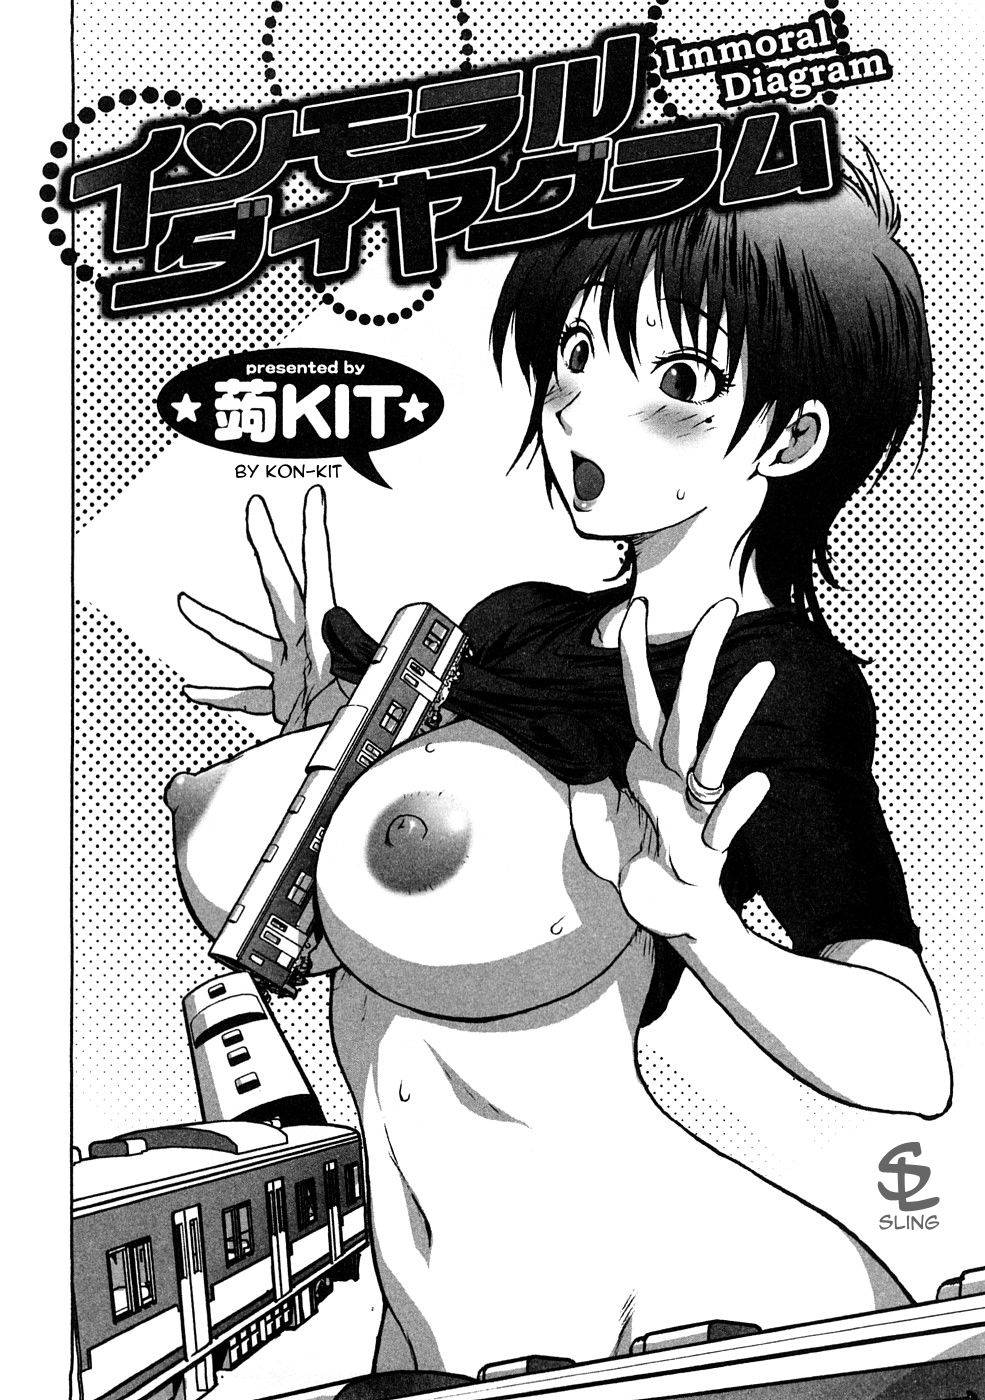 Hentai Manga Comic-Immoral Diagram-Read-2